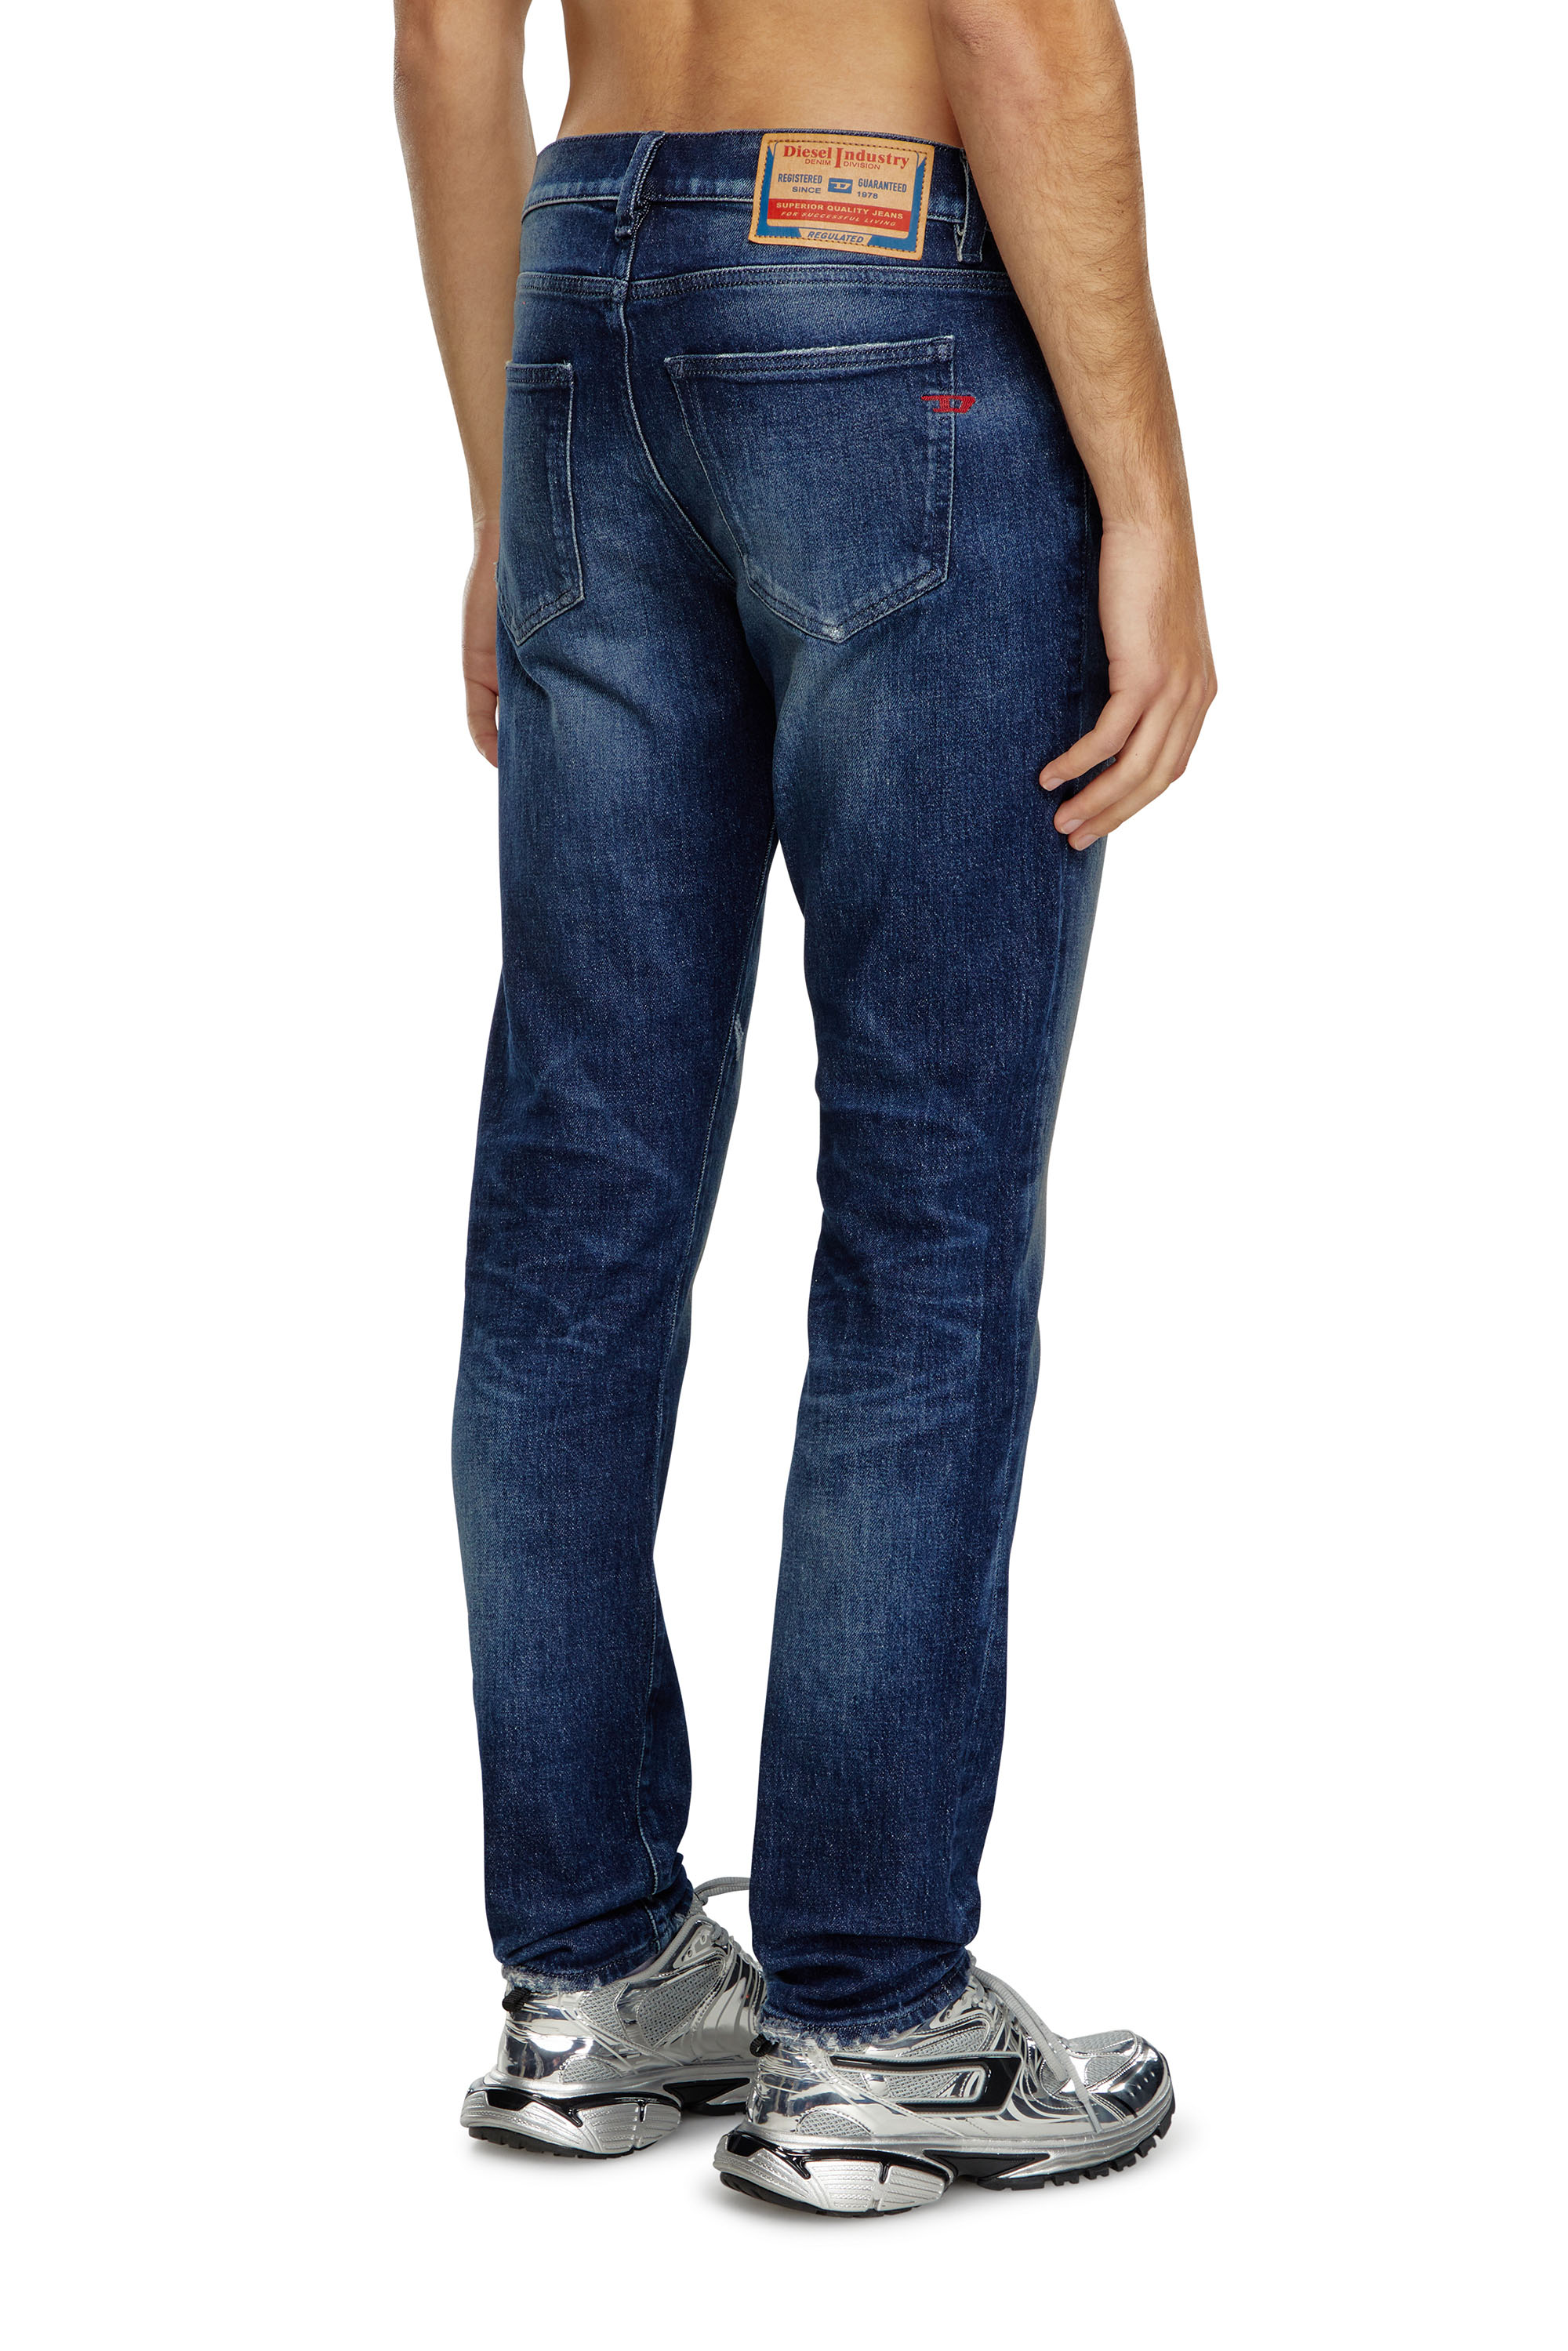 Diesel - Slim Jeans 2019 D-Strukt 09J56, Hombre Slim Jeans - 2019 D-Strukt in Azul marino - Image 3